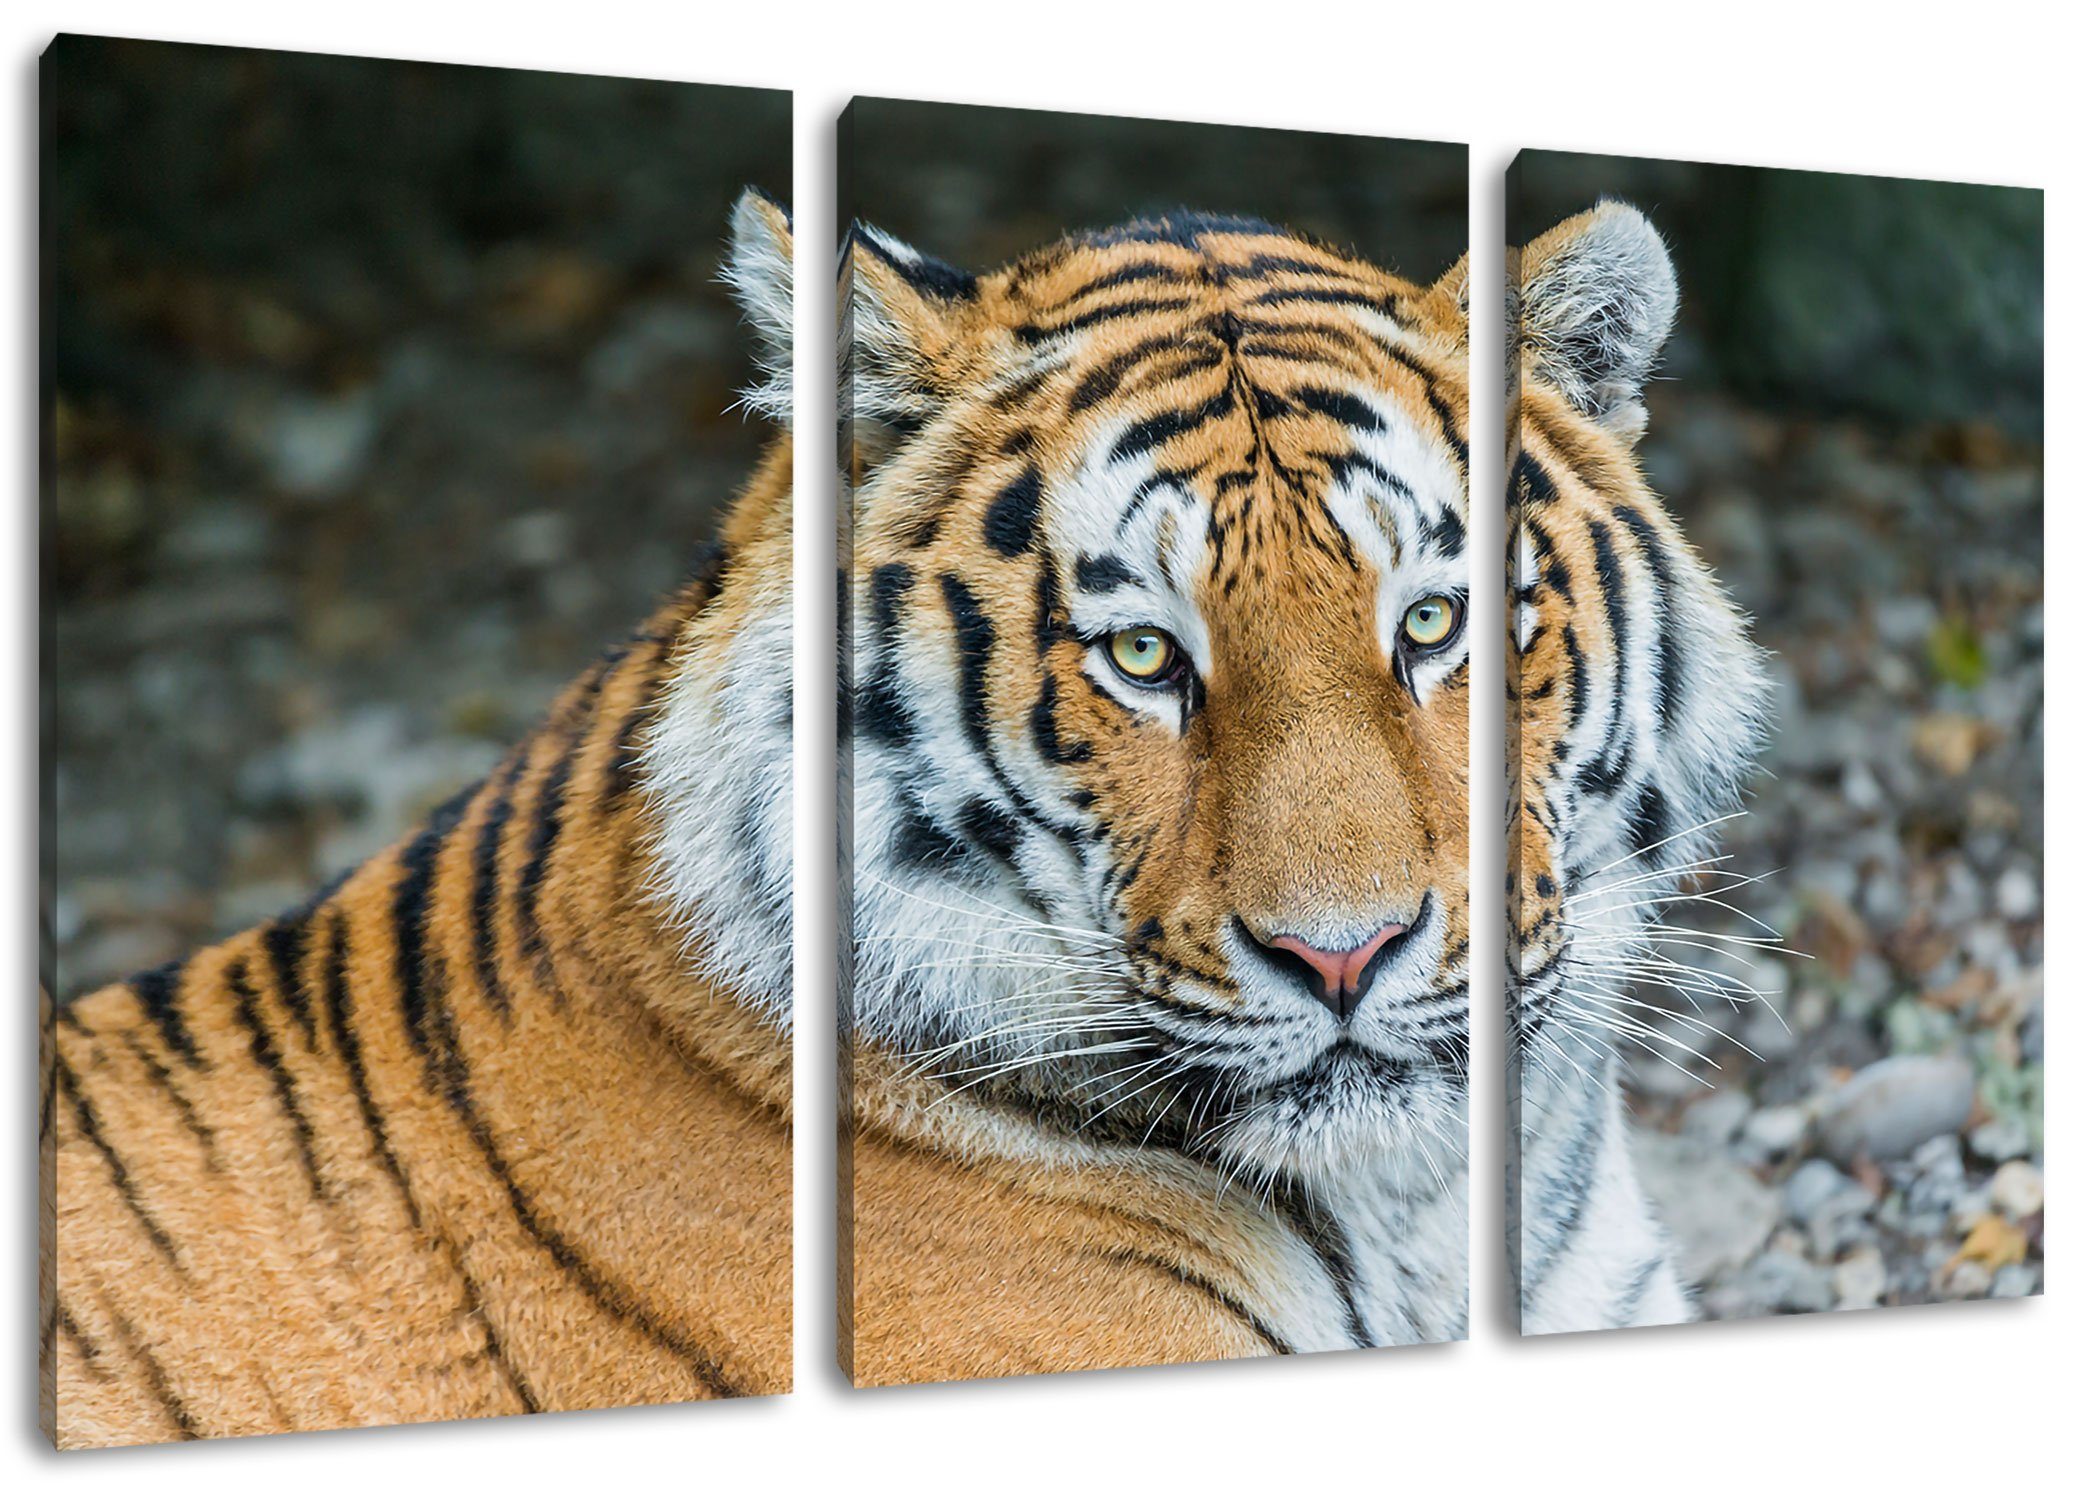 inkl. prächtiger Tiger, bespannt, Pixxprint fertig Leinwandbild 3Teiler (120x80cm) St), prächtiger Zackenaufhänger (1 Tiger Leinwandbild